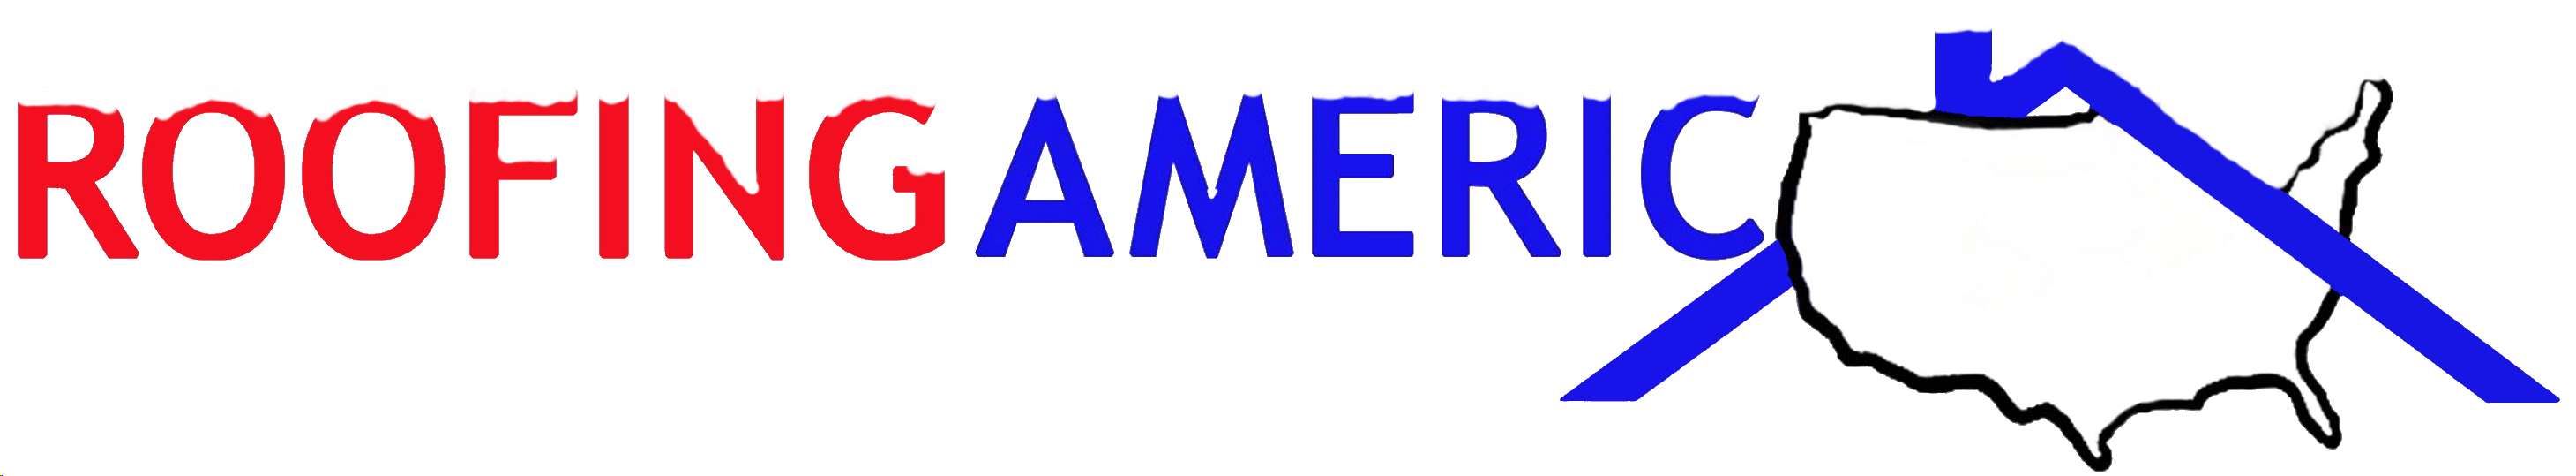 Roofing America Logo